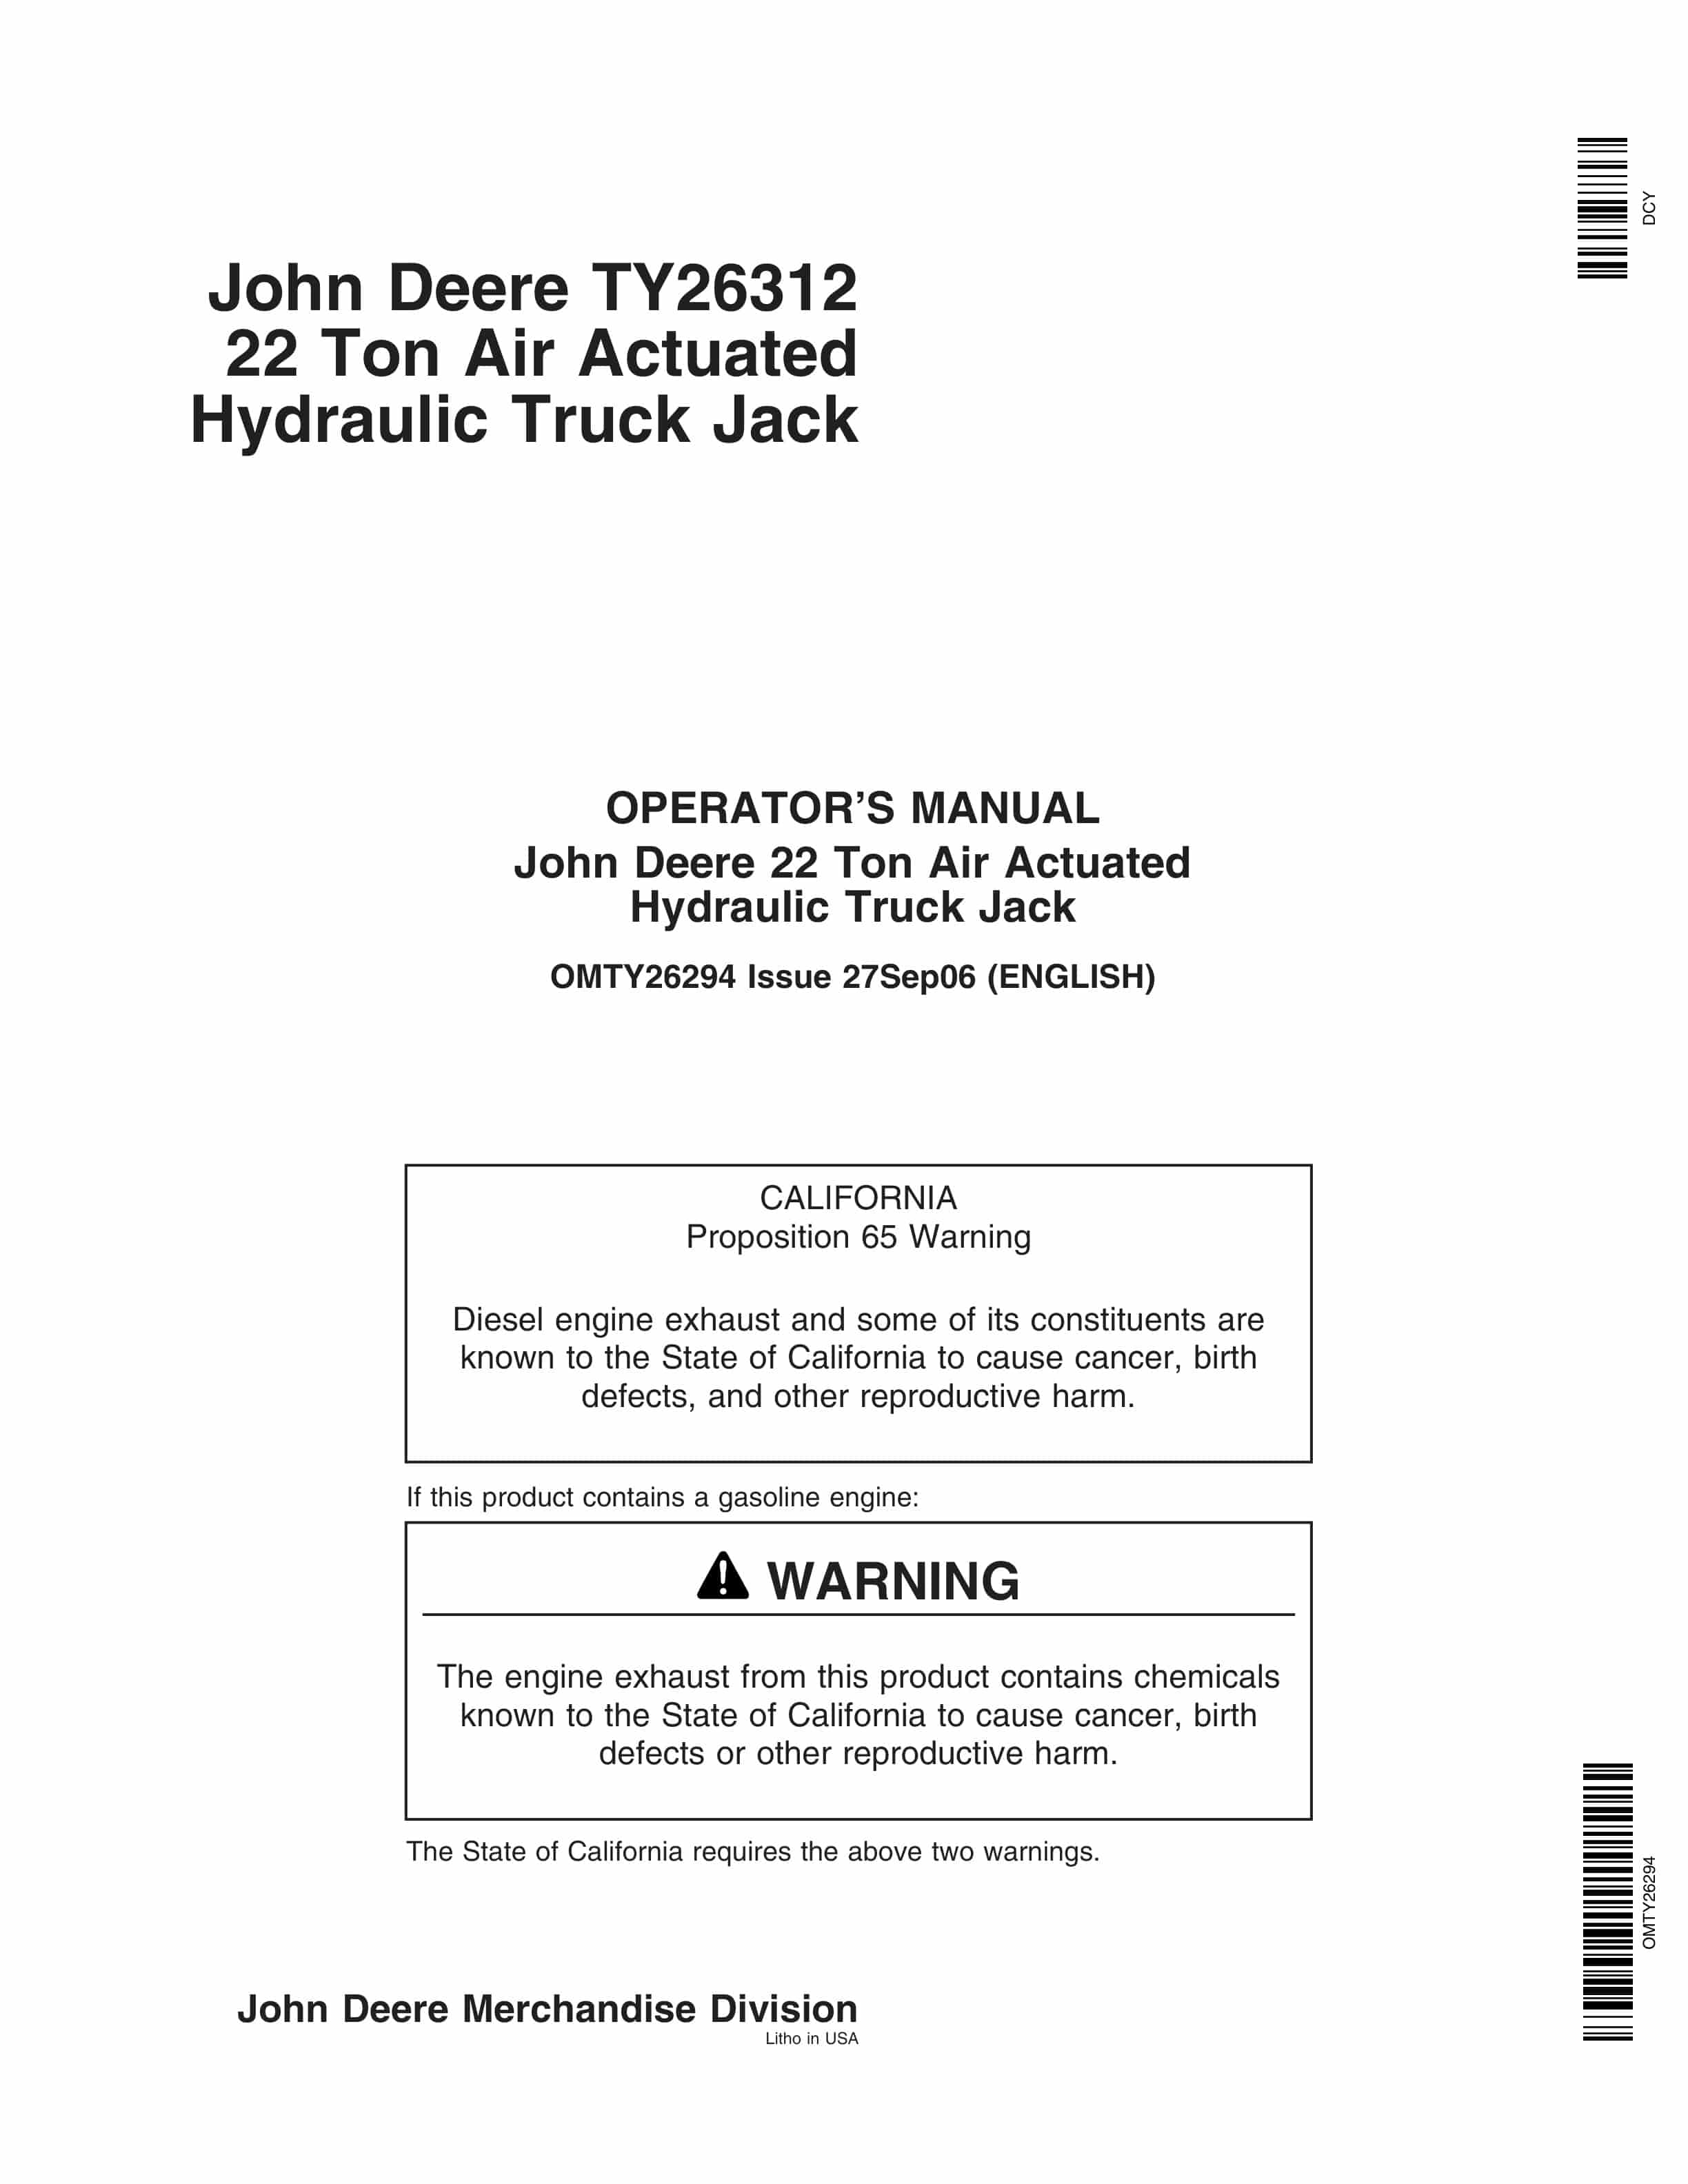 John Deere 22 Ton Air Actuated Hydraulic Truck Jack Operator Manual OMTY26294 1